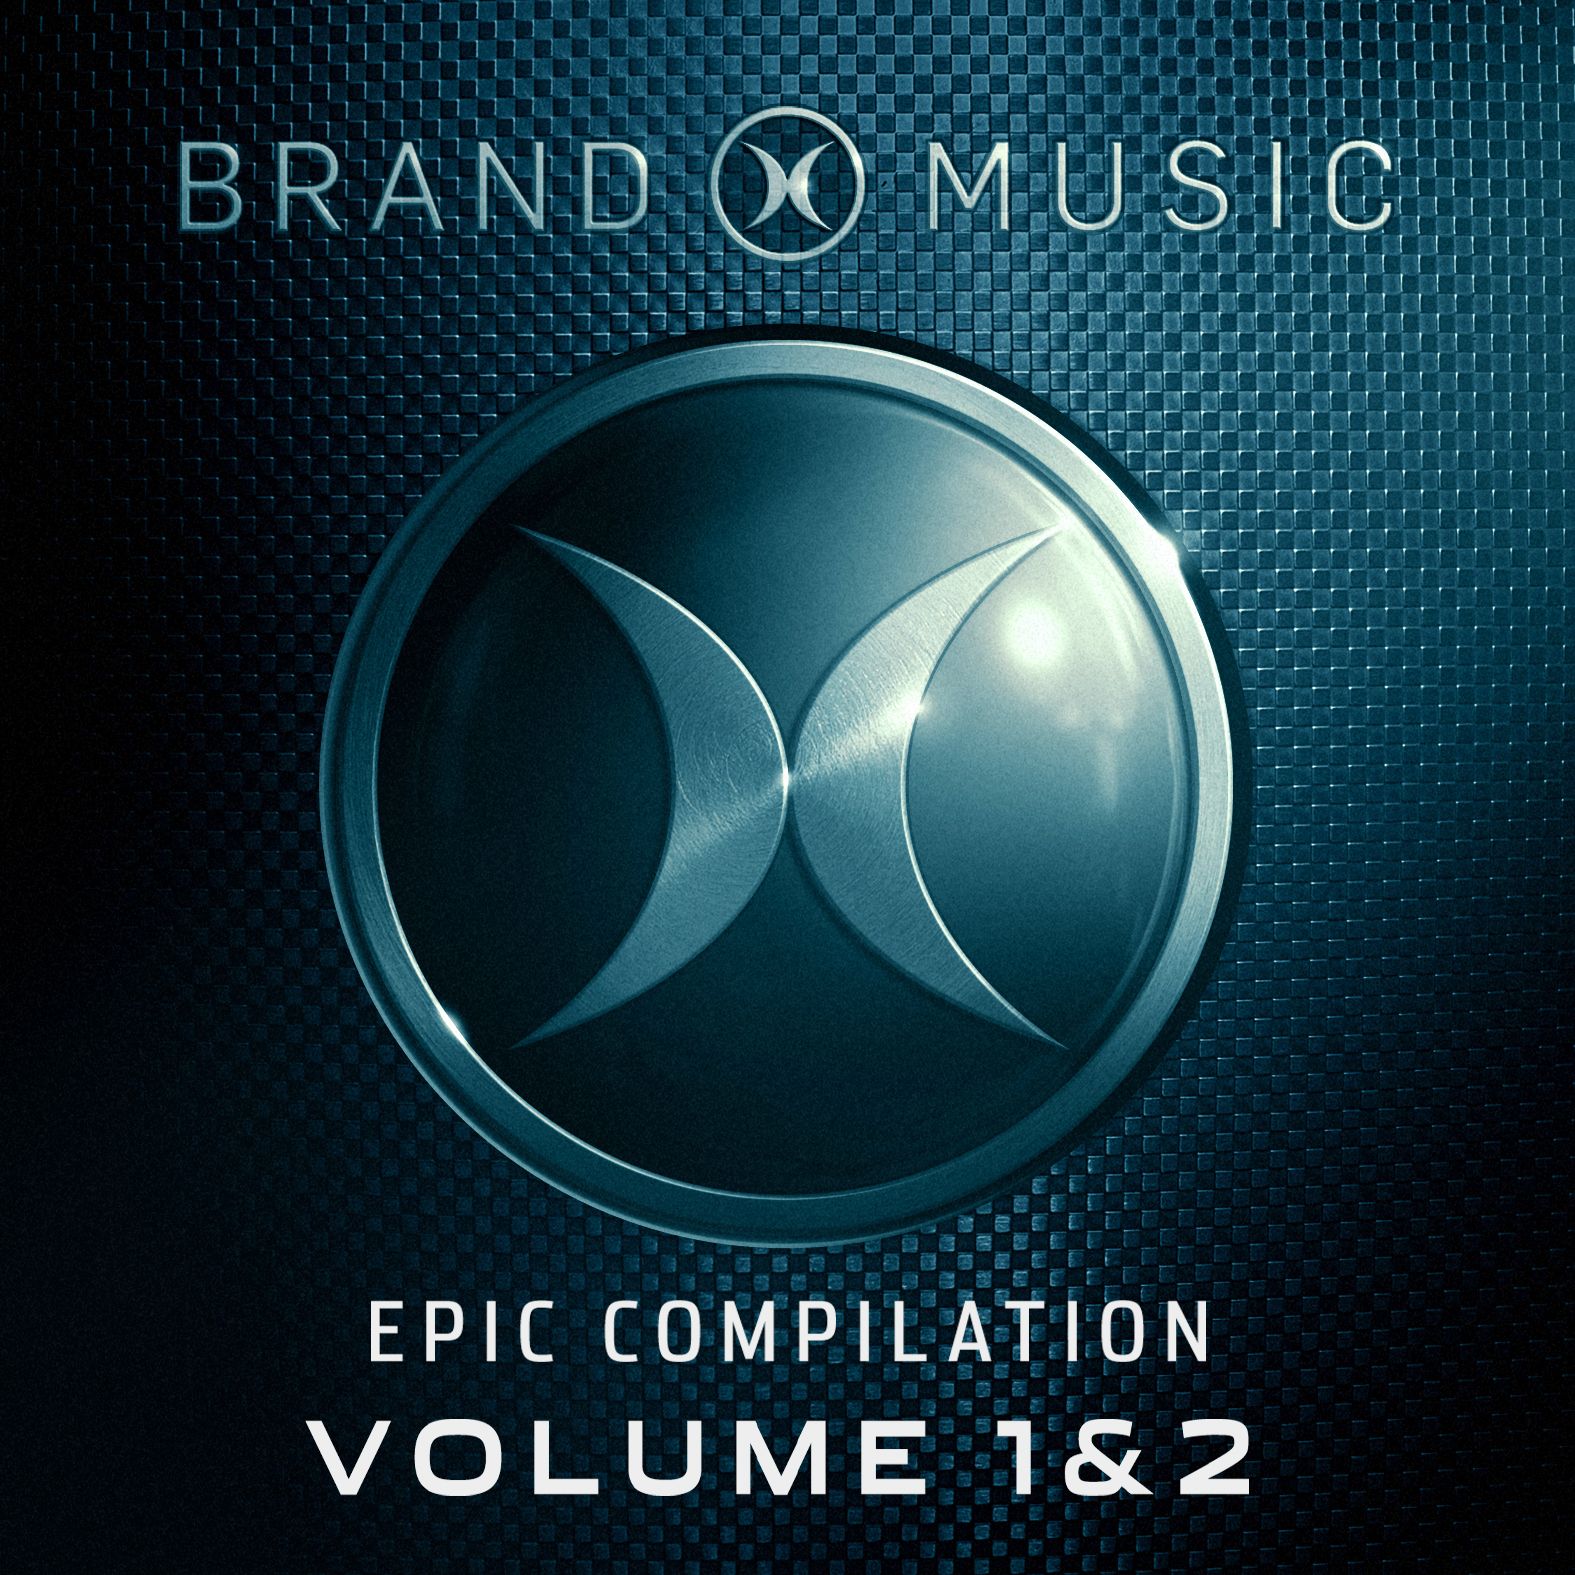 Epic Volume 1 & 2